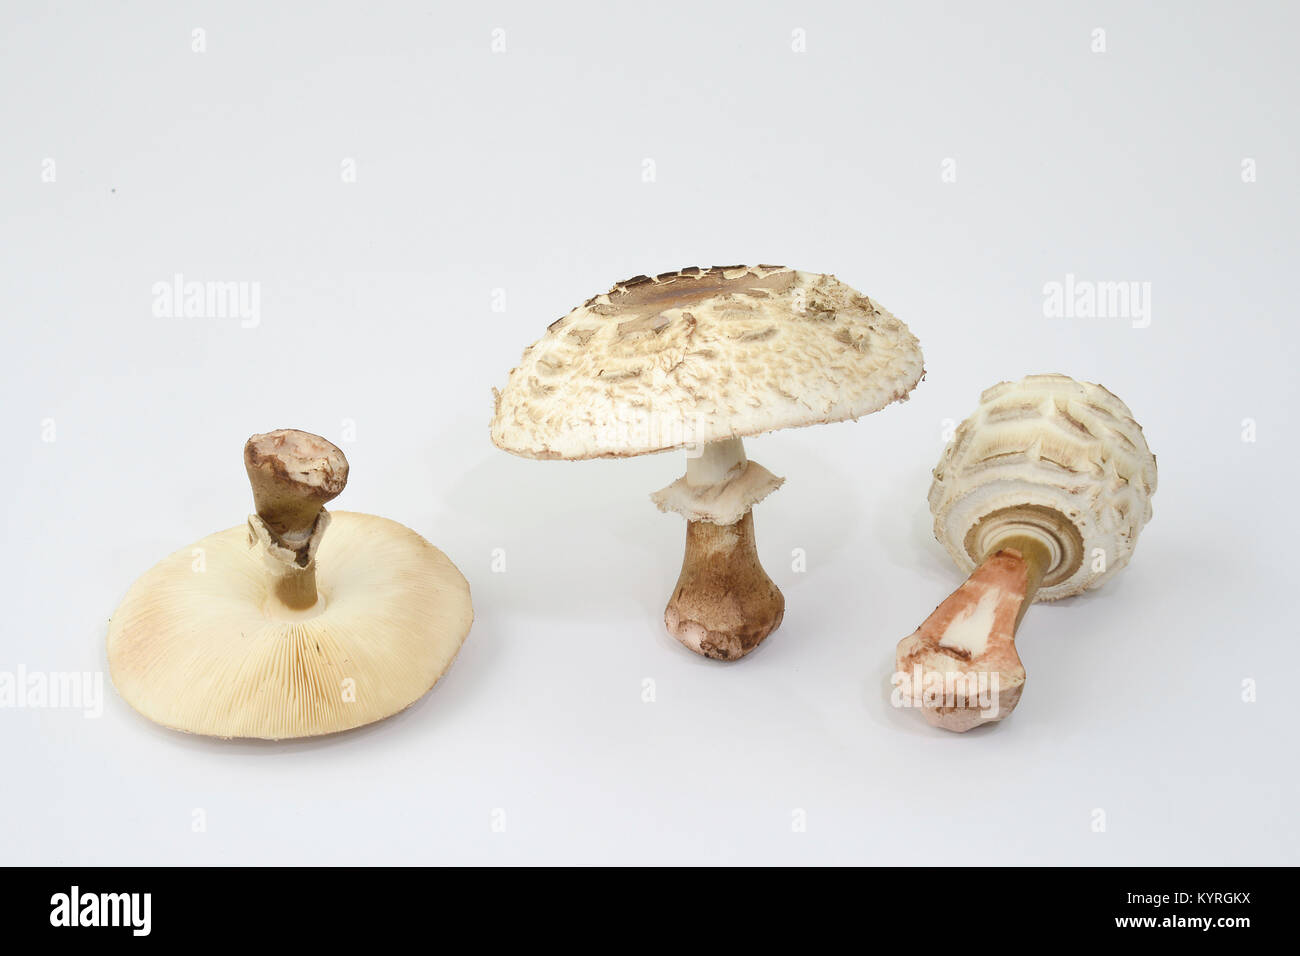 Parasol Mushroom (Macrolepiota procera), three fruiting bodies of different ages as Studio image Stock Photo